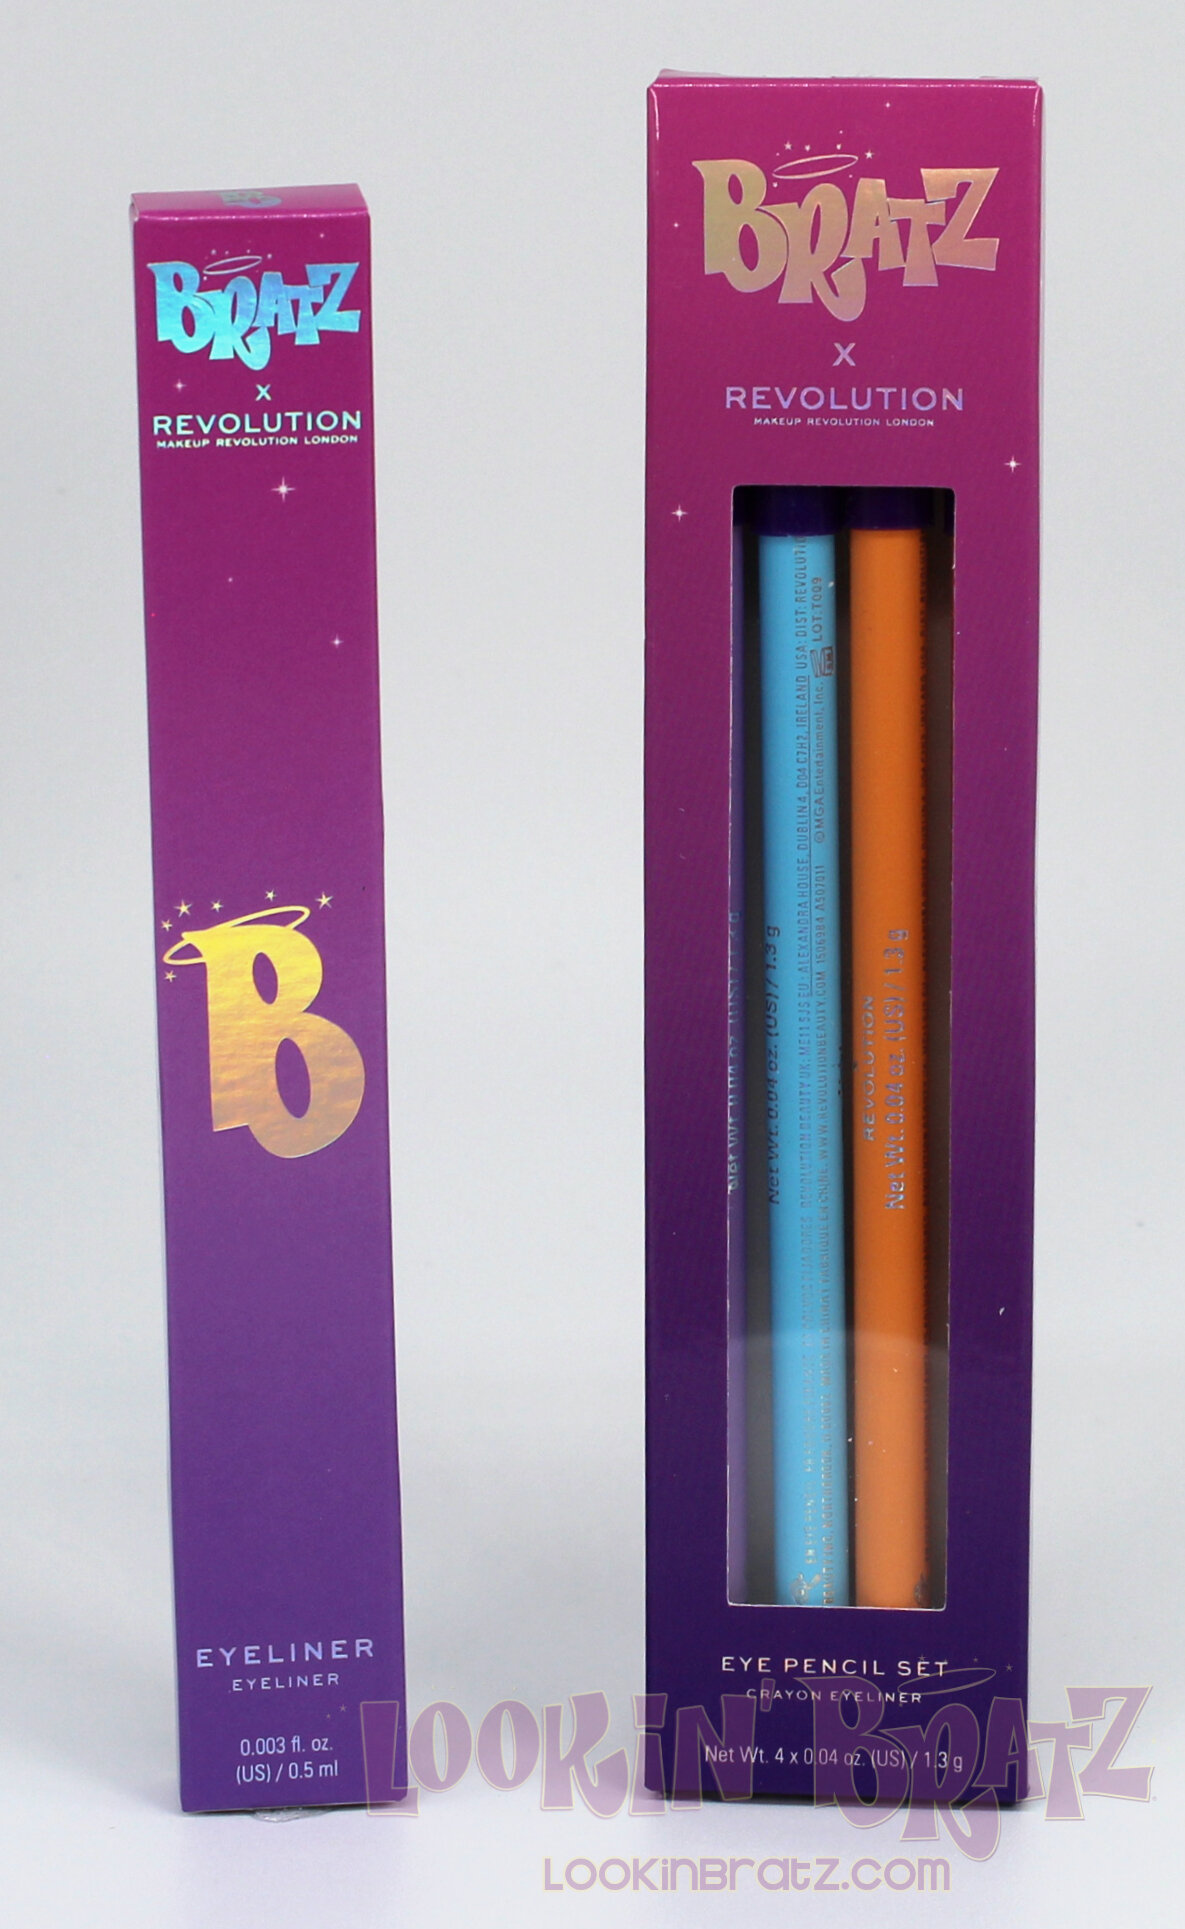 Bratz x Revolution Eyeliner and Eye Pencils Packaging